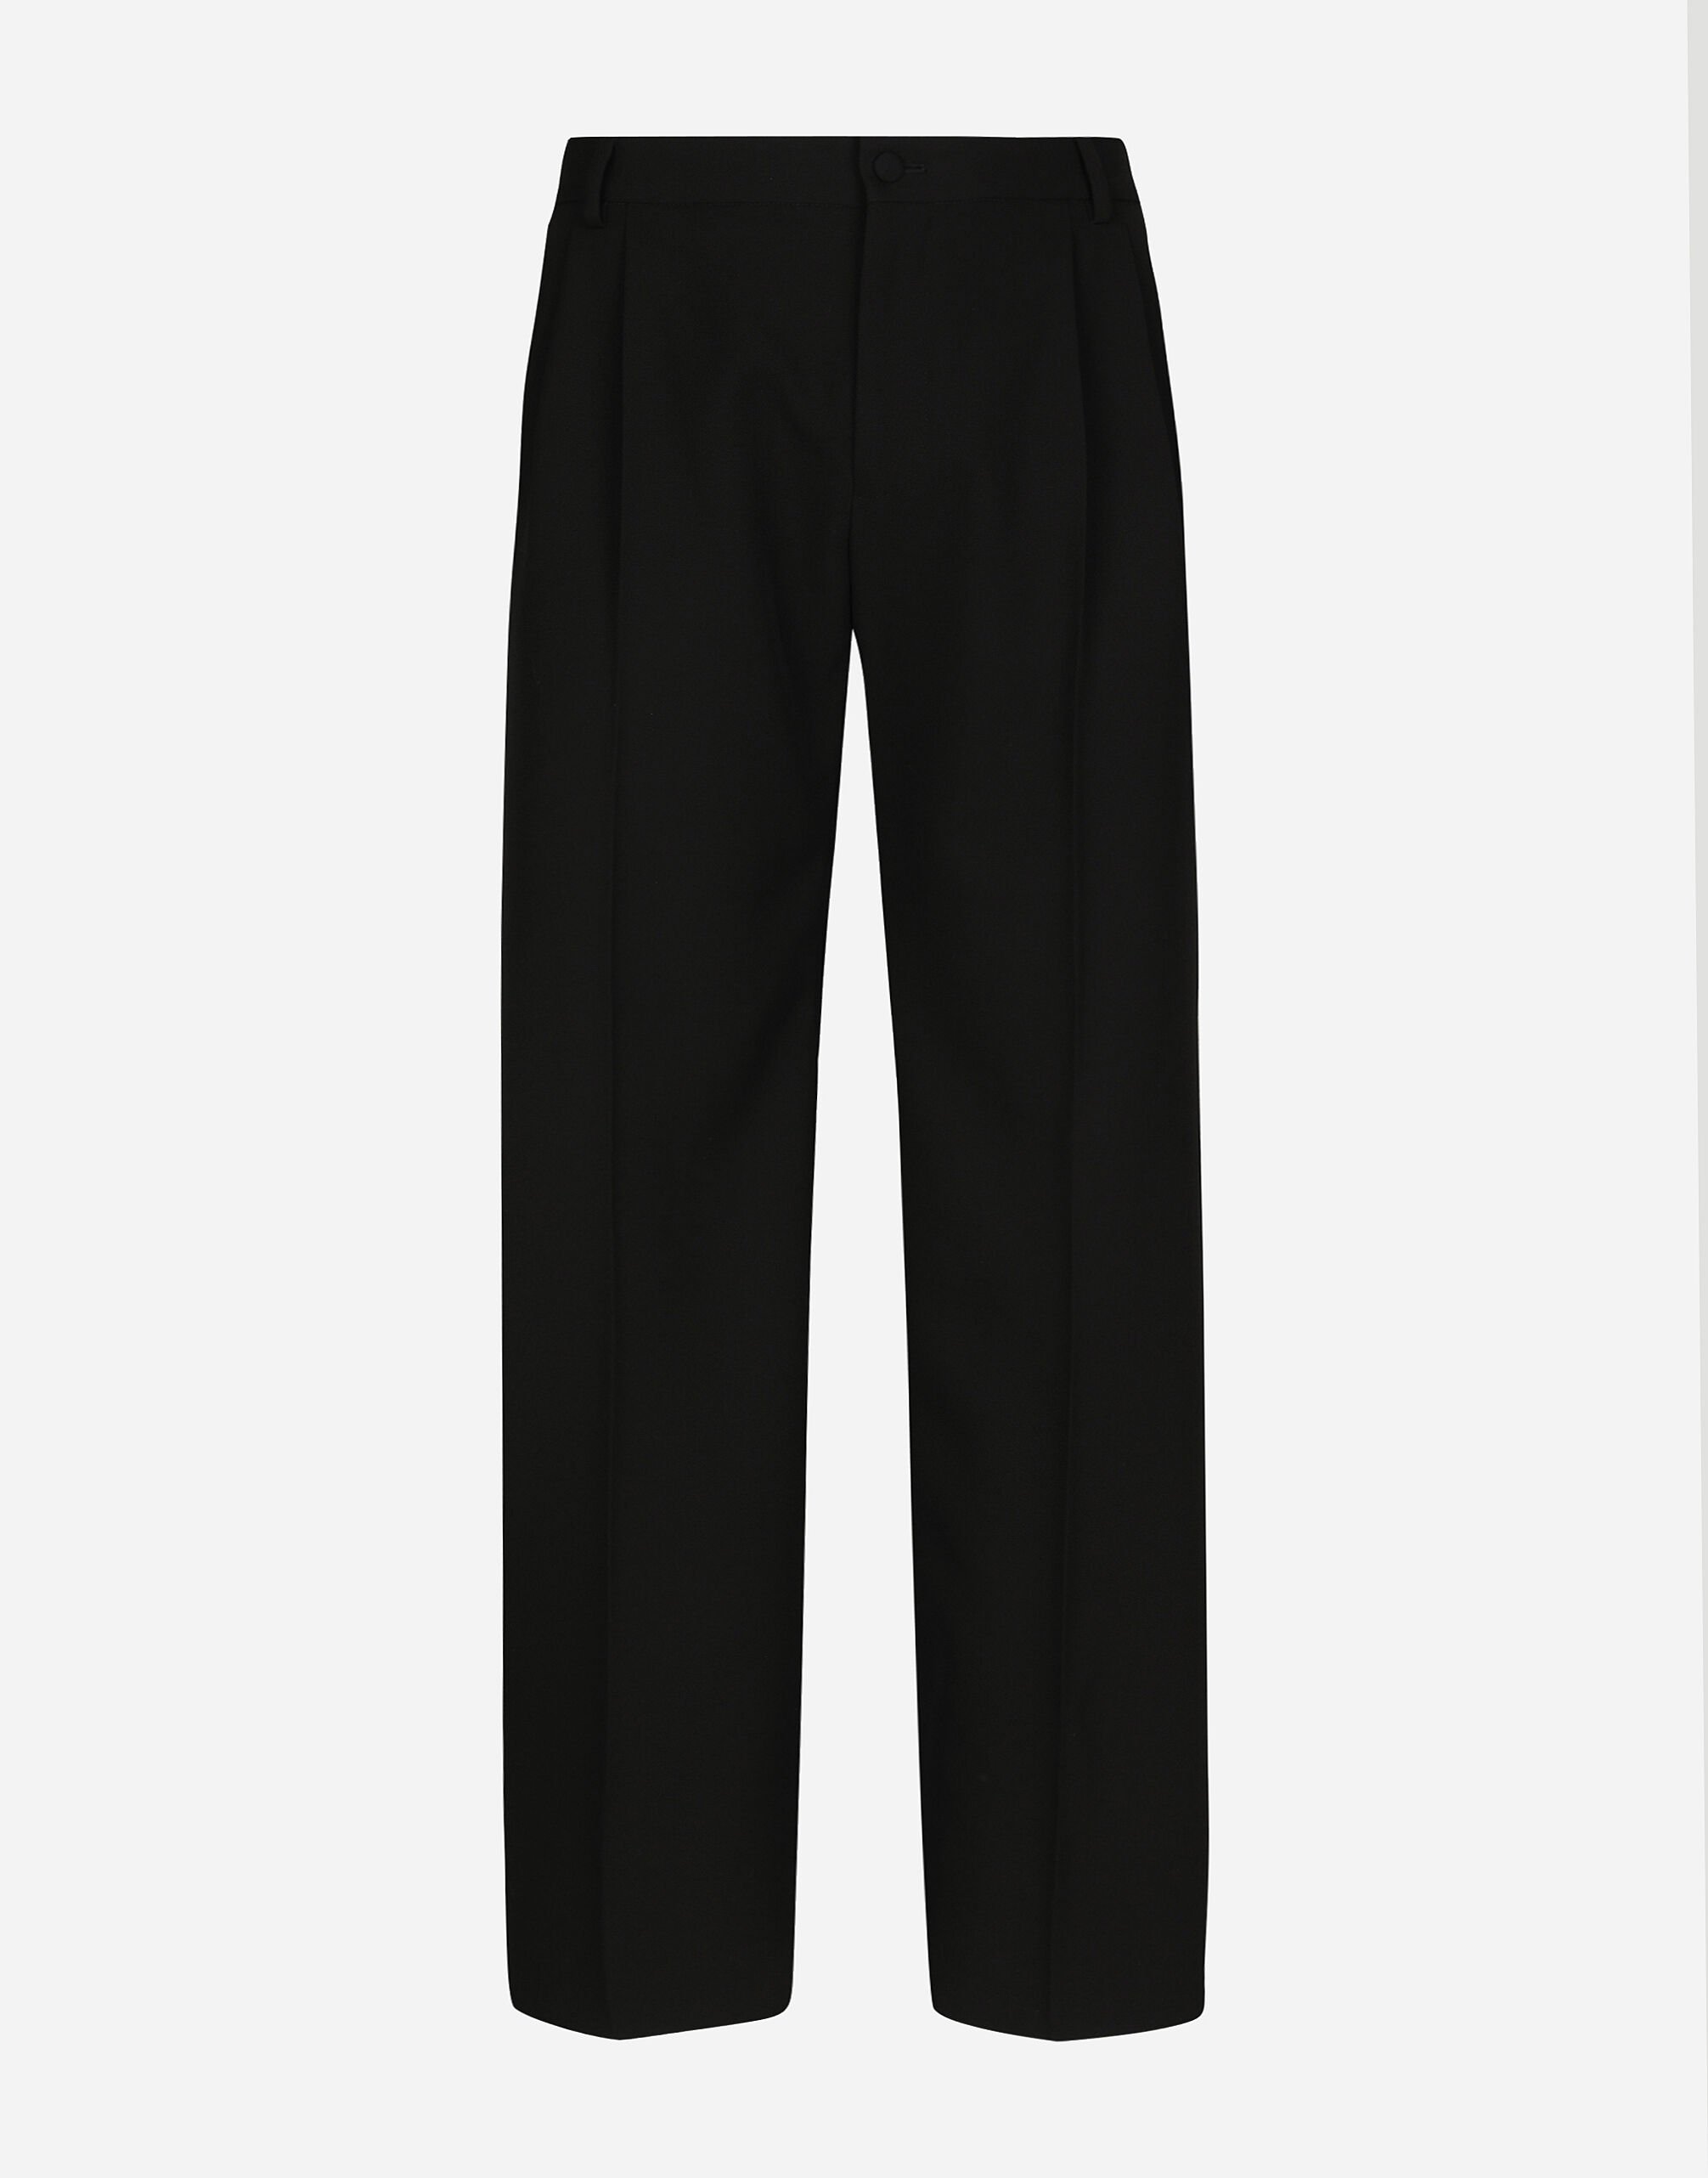 Dolce & Gabbana Tailored wool pants with darts Black GP03JTGH253